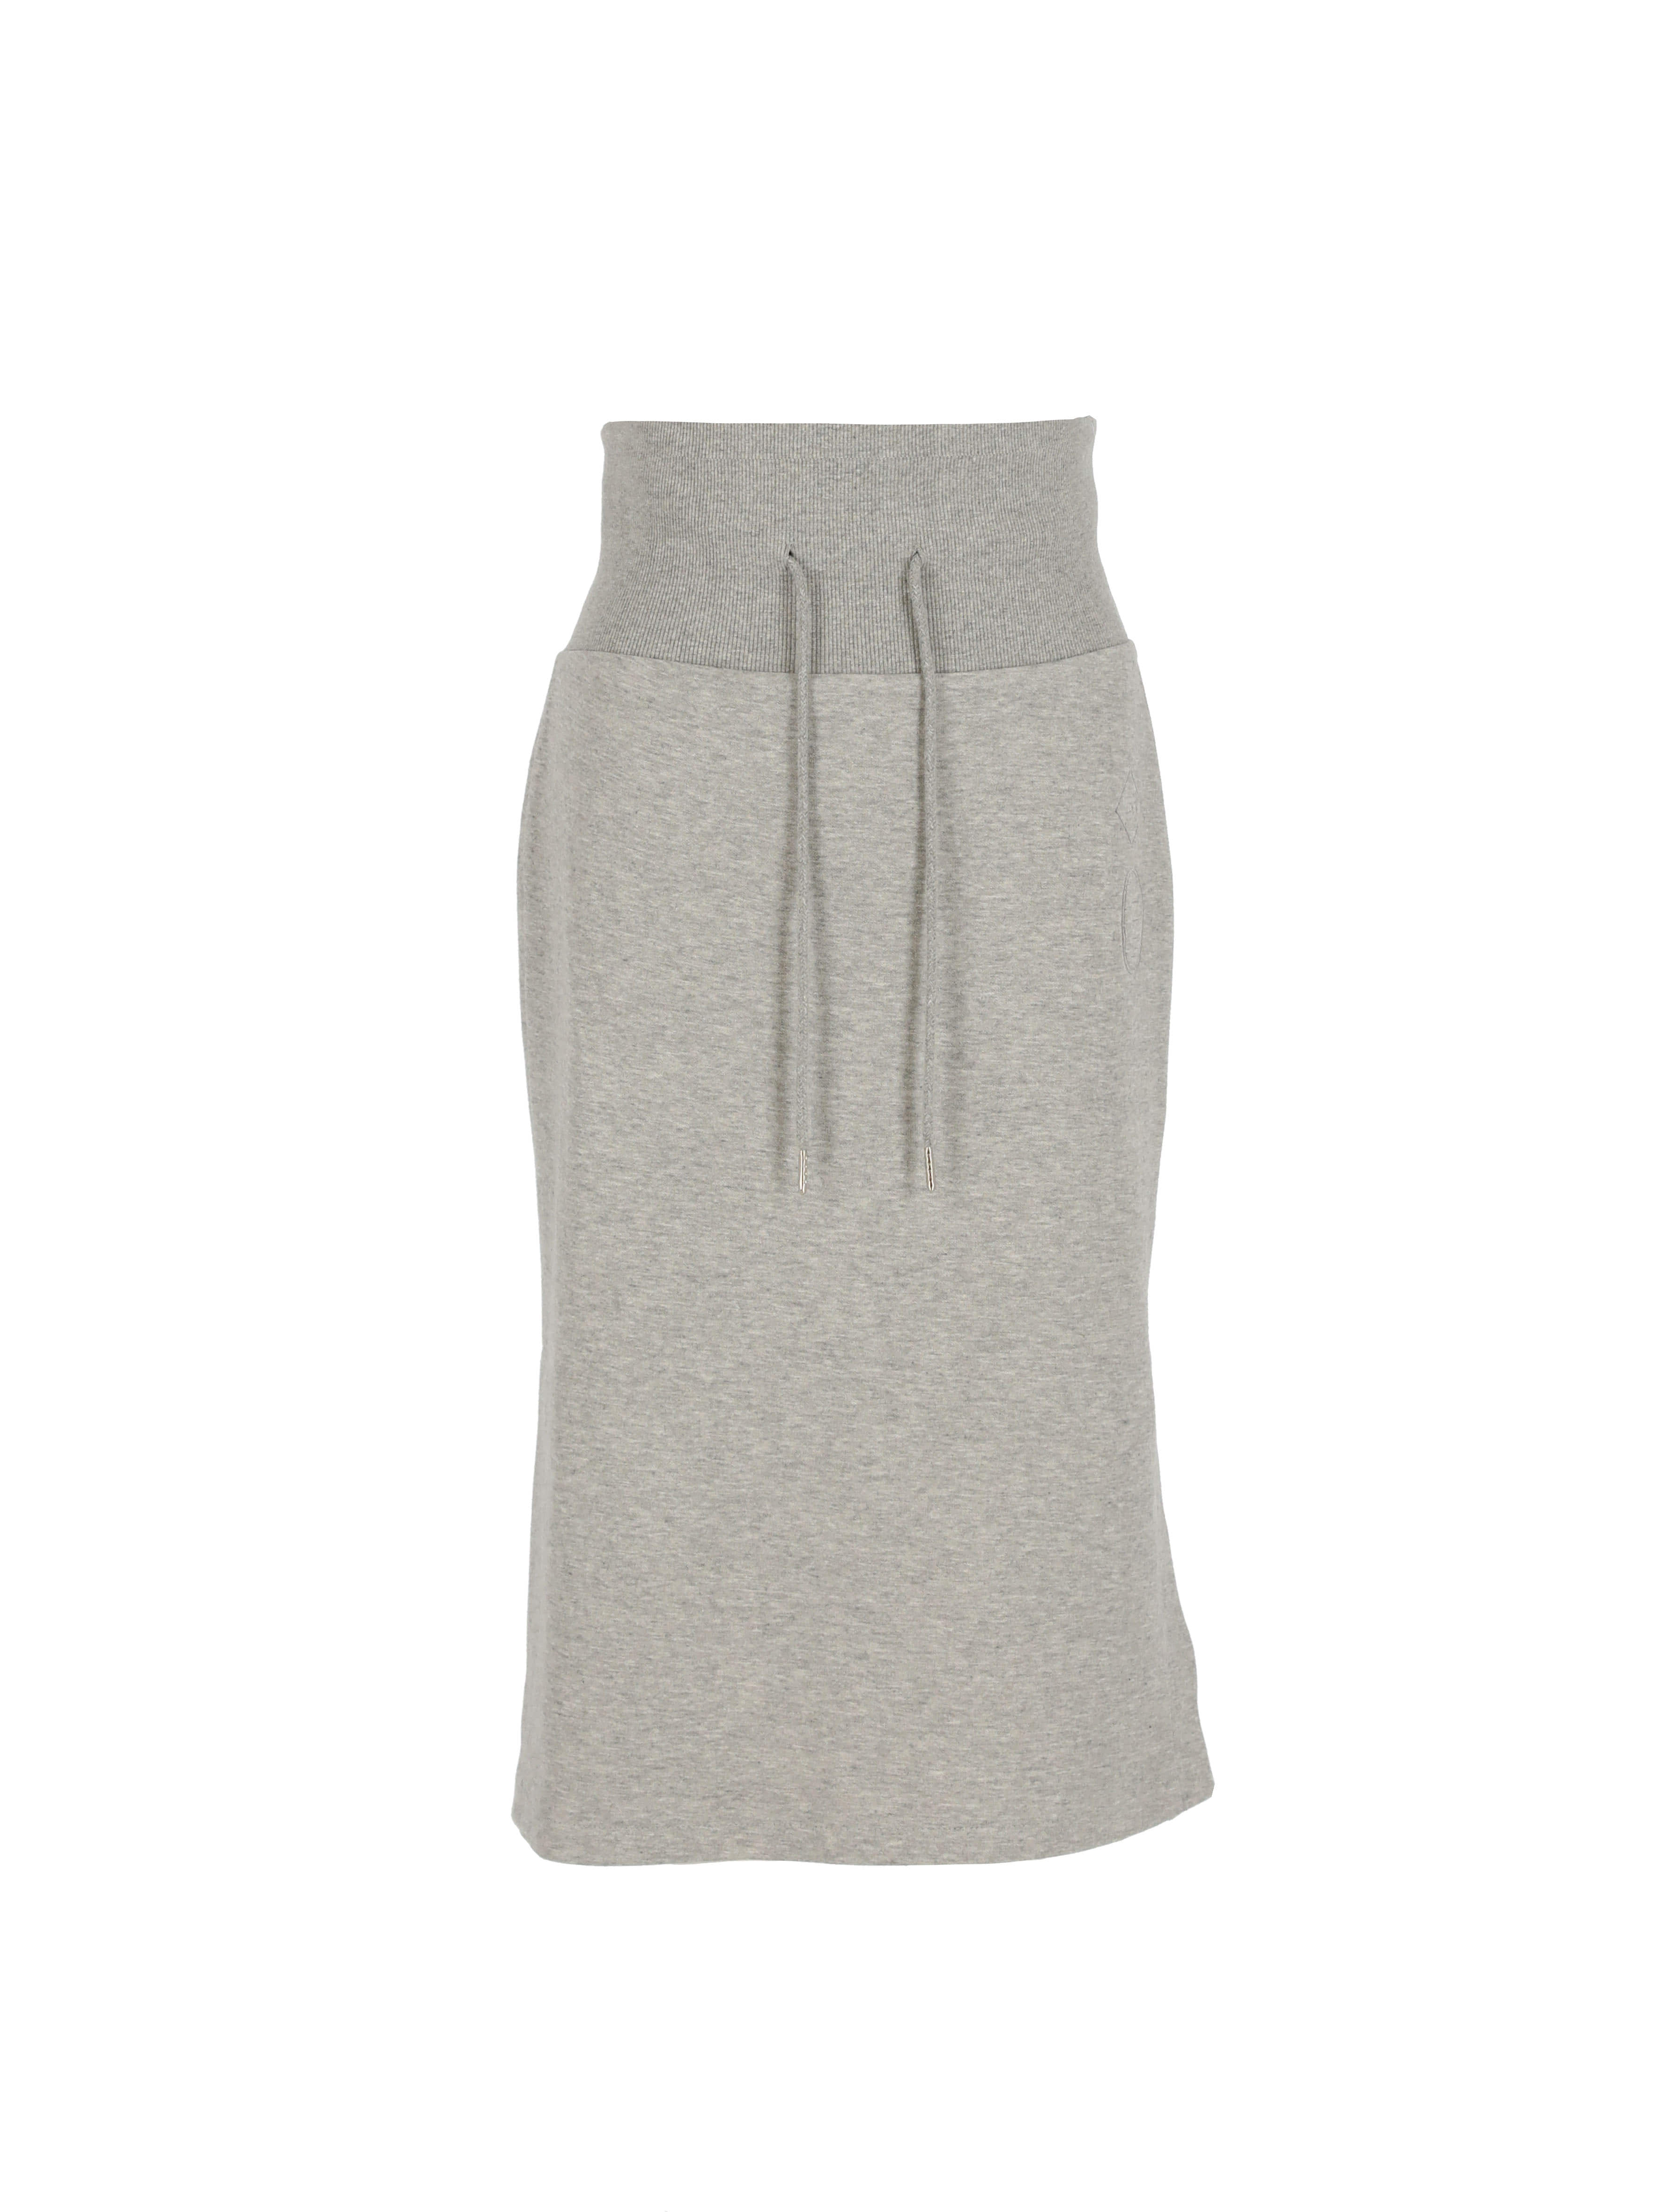 [VIMUN X hier et demain] Cotton-blend slit skirt - Grey